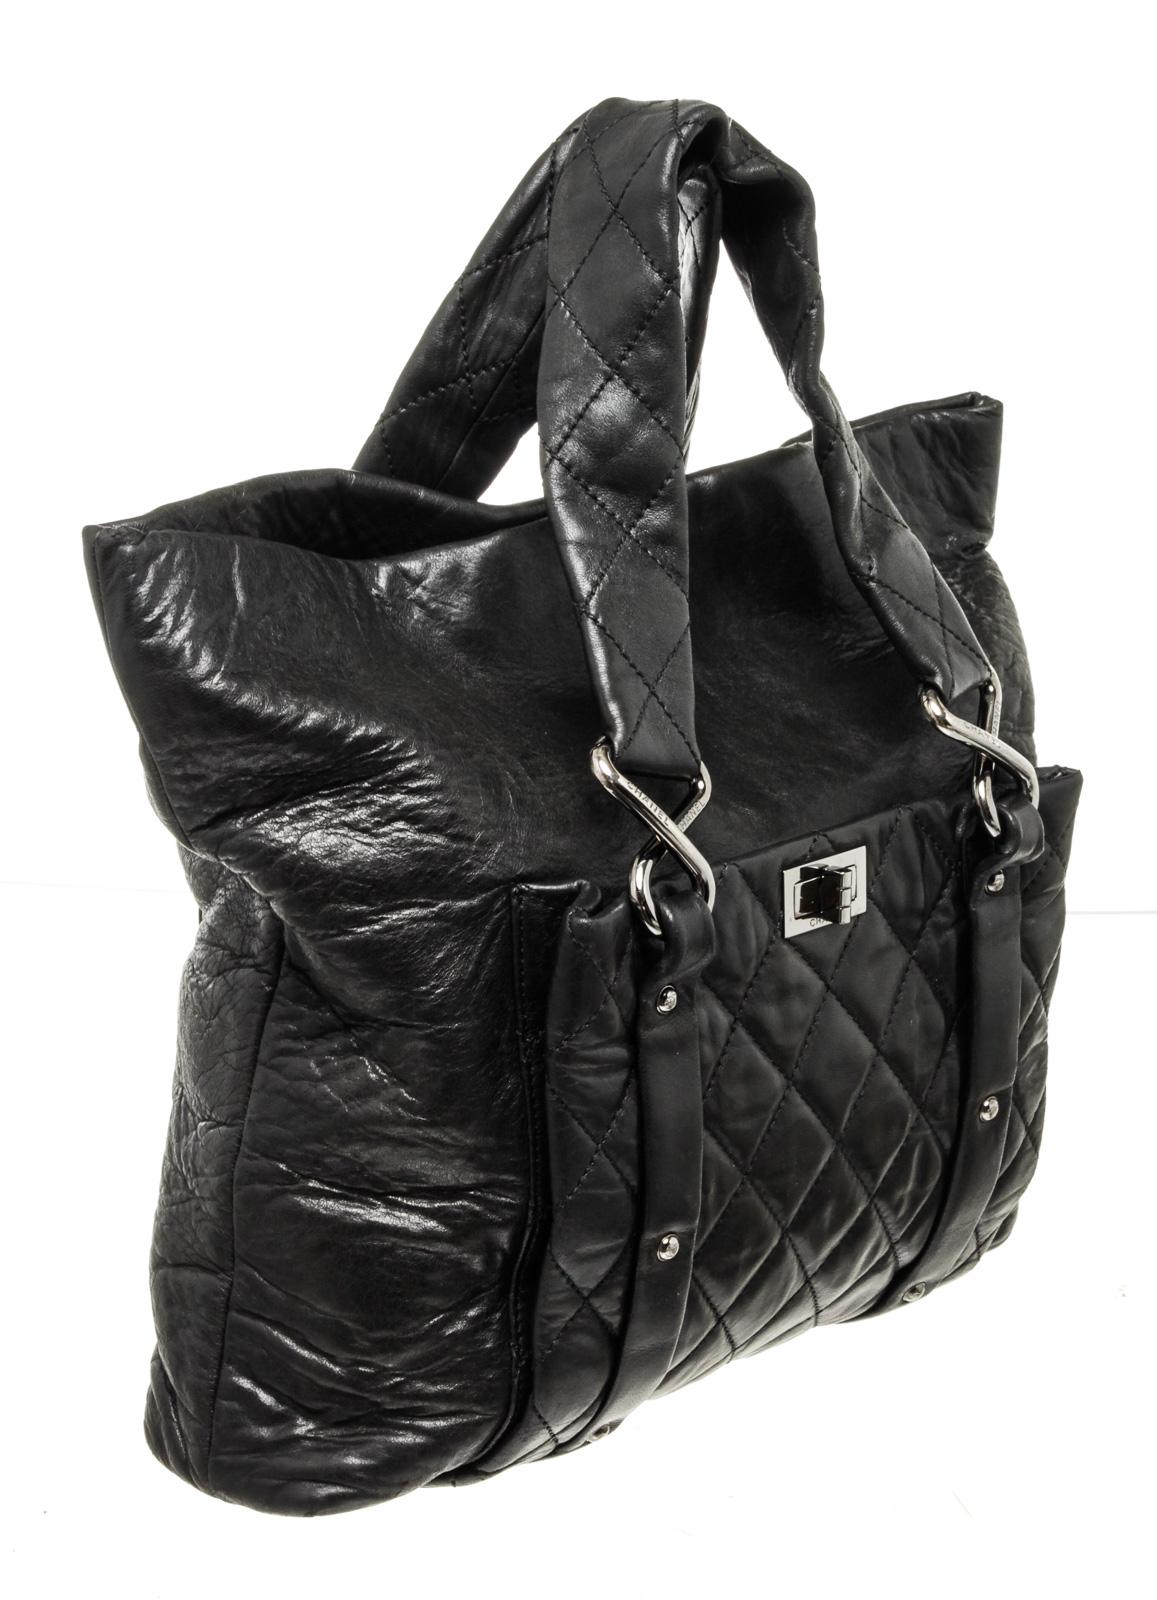 Chanel Black Leather Reissue Shoulder Bag with leather, gold-toneÂ hardware, interior slip pocket, dual top handleÂ andÂ flapÂ closure.

47244MSCÂ 